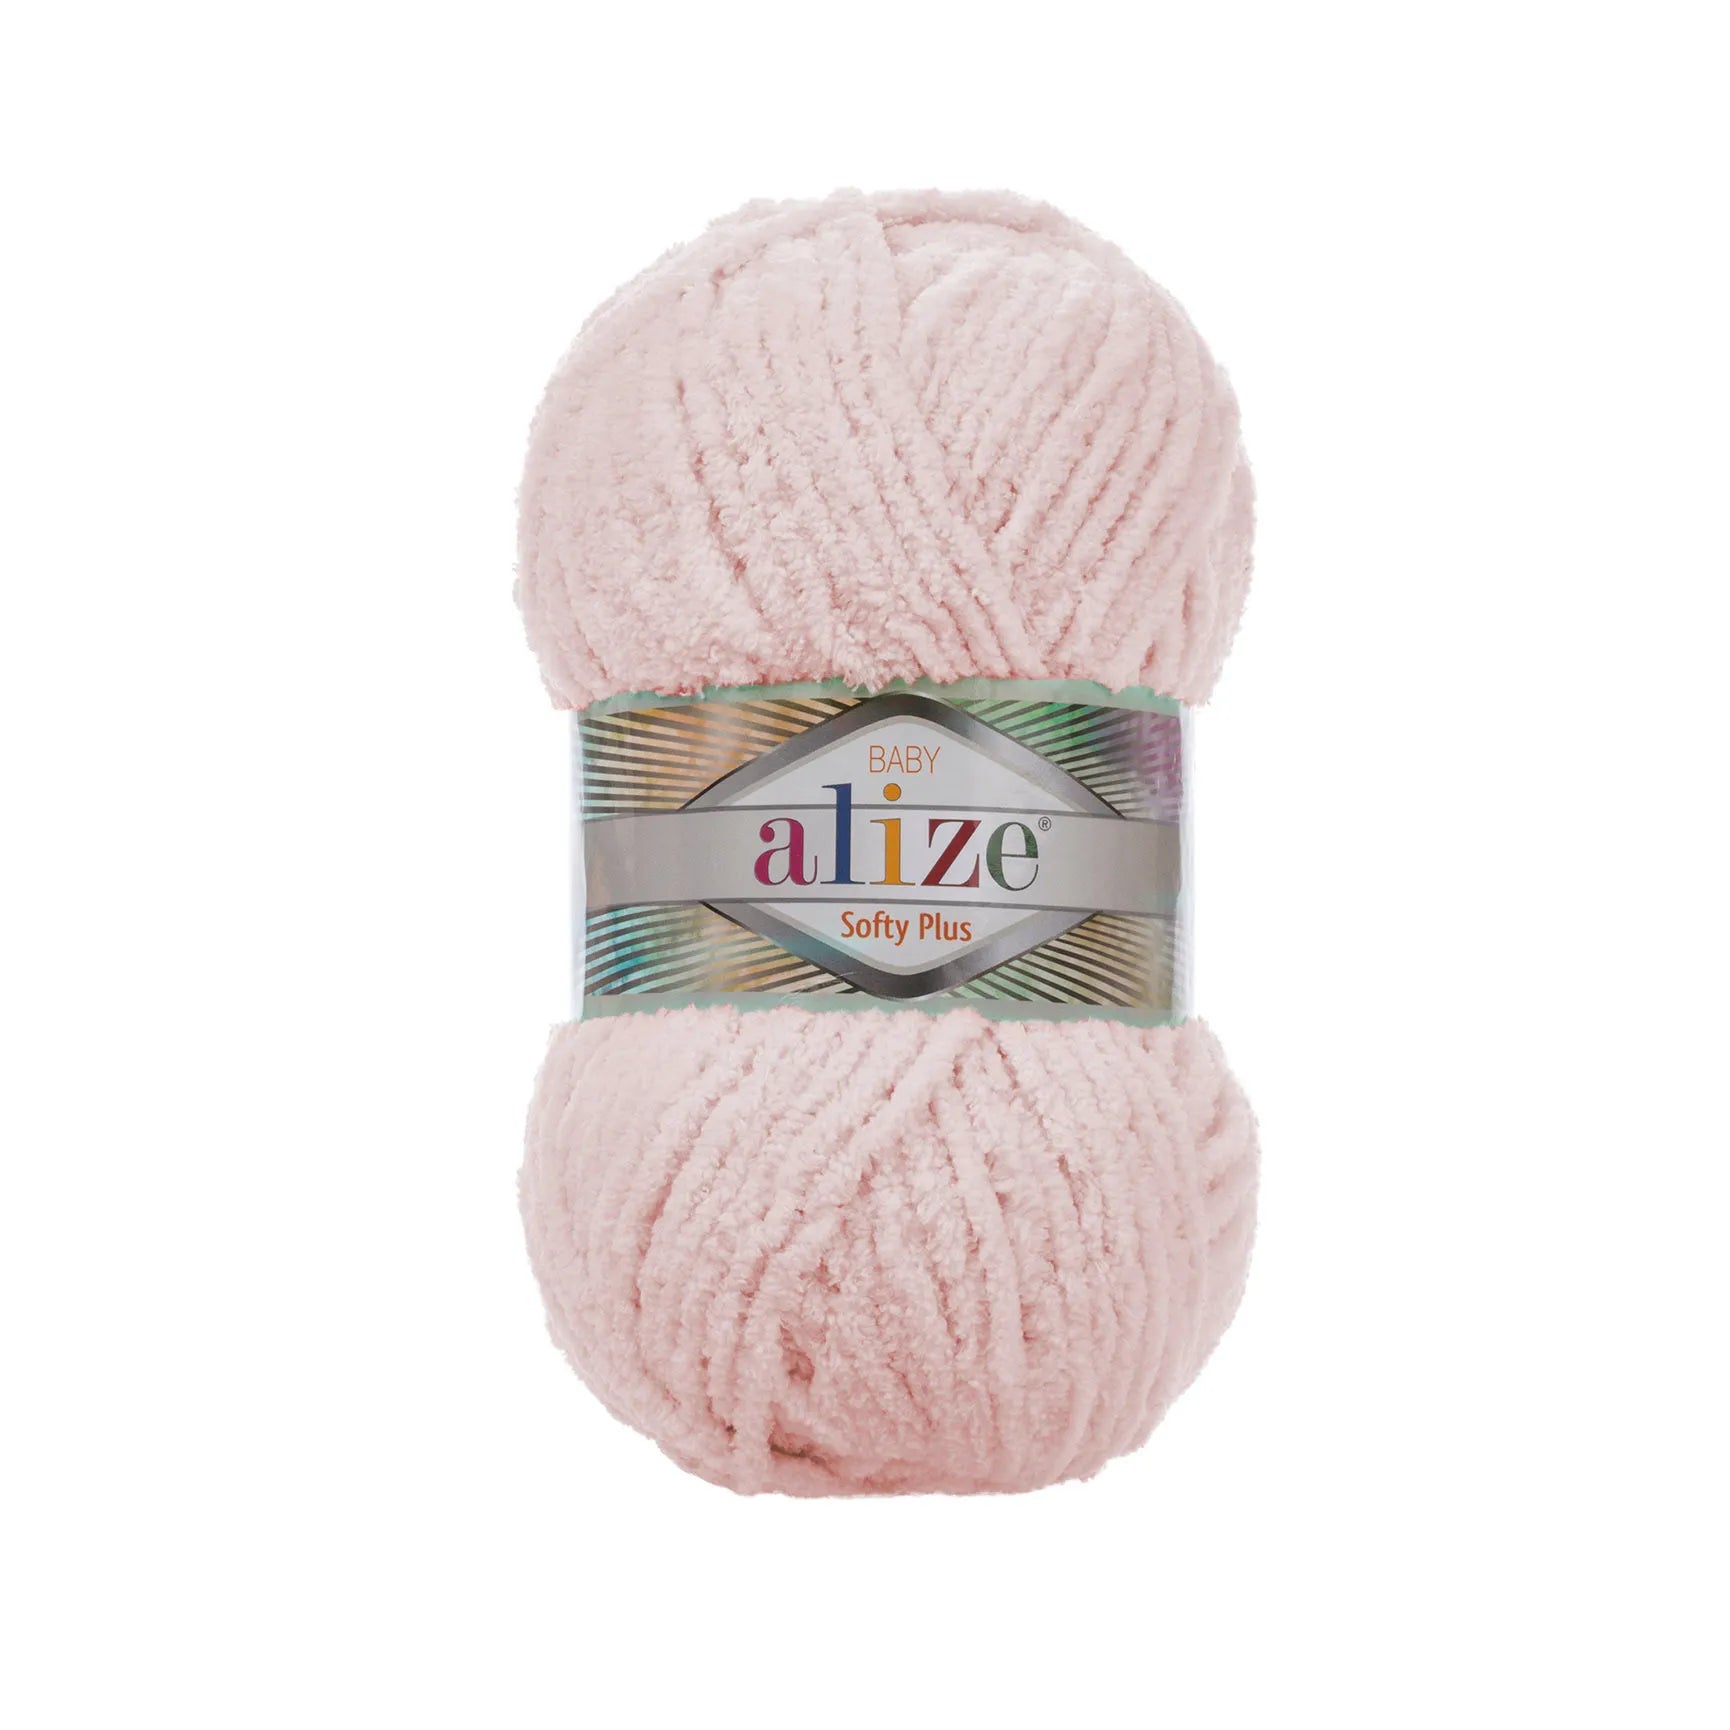 Alize Softy Plus Yarn Hobby Shopy Turkish Store Shop Hand Knitting Yarn 161